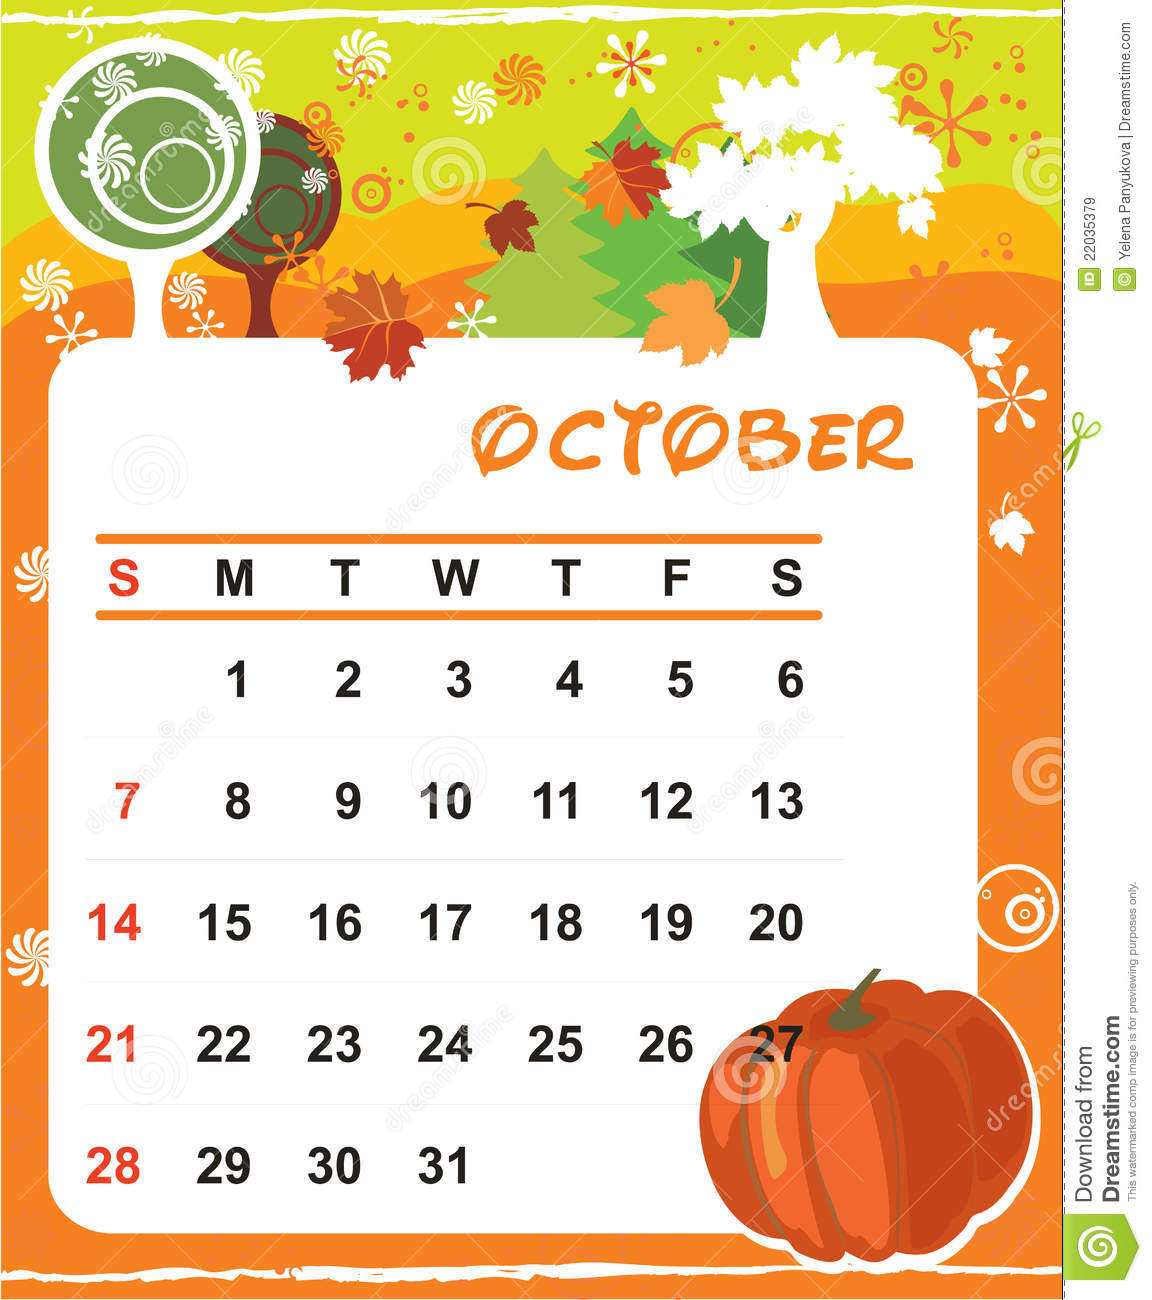 Decorative Frame For Calendar   October Royalty Free Stock Images    